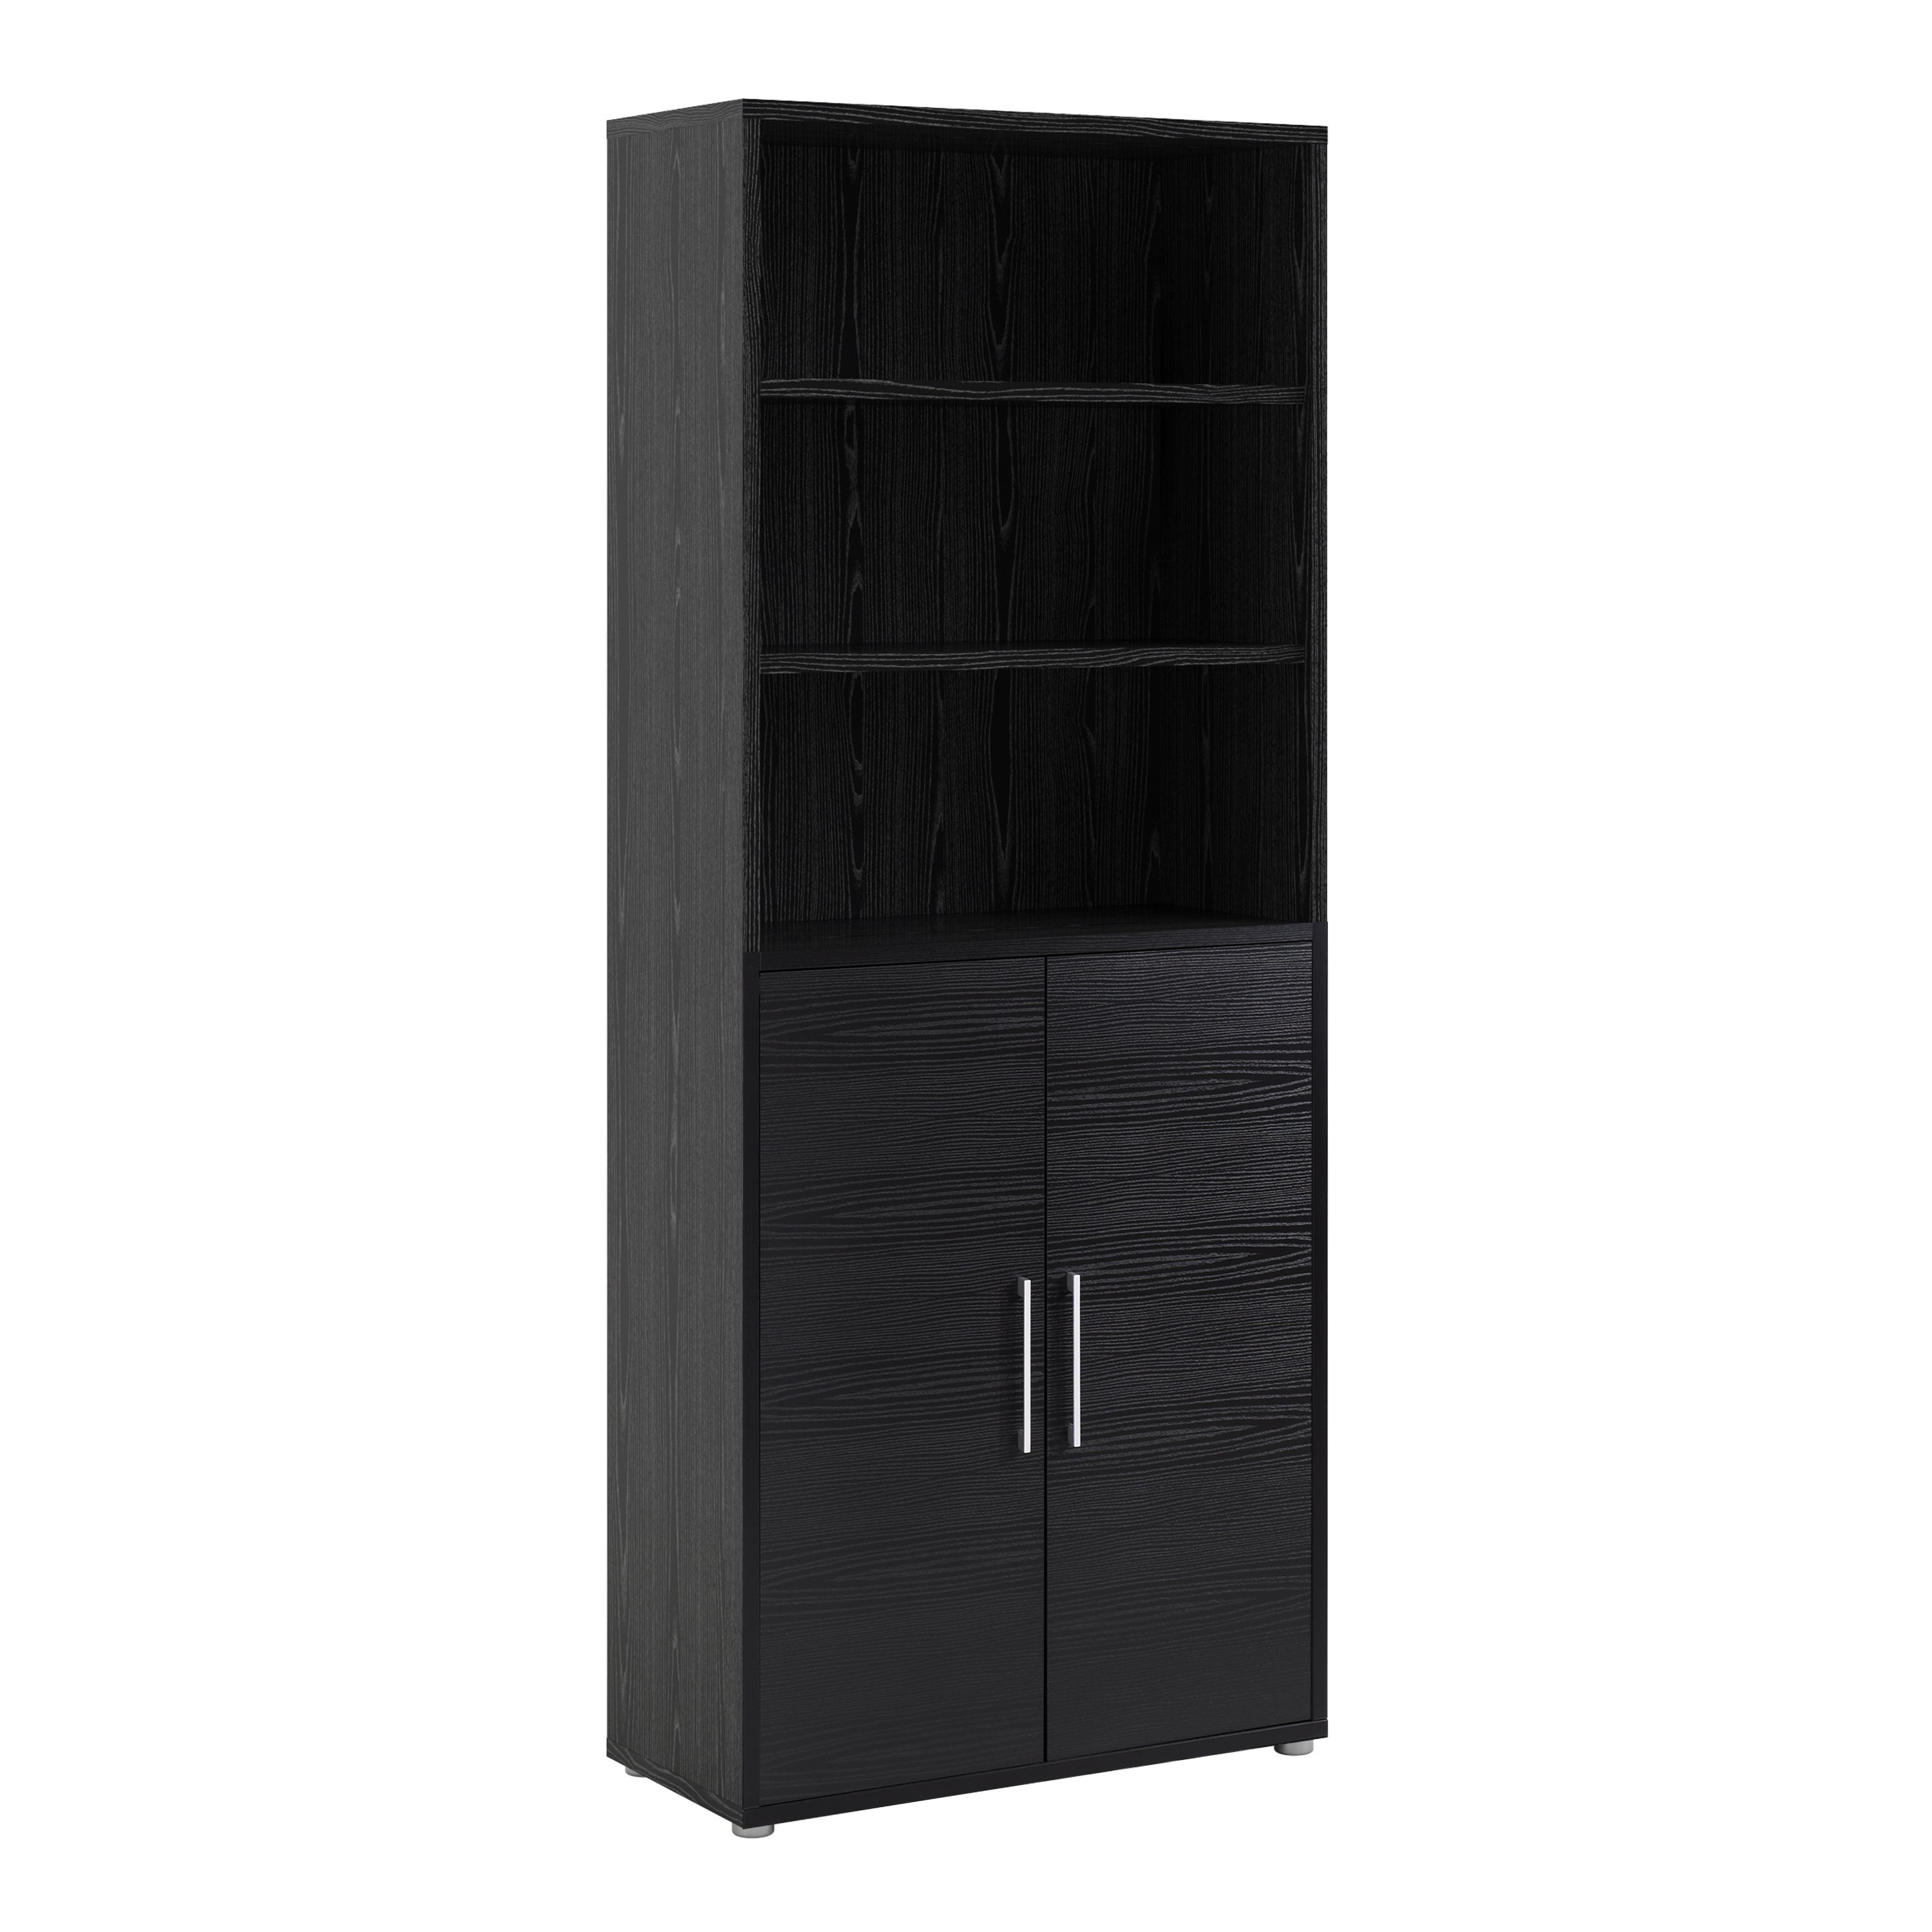 Prima Bookcase 4 Shelves with 2 Doors in Black woodgrain